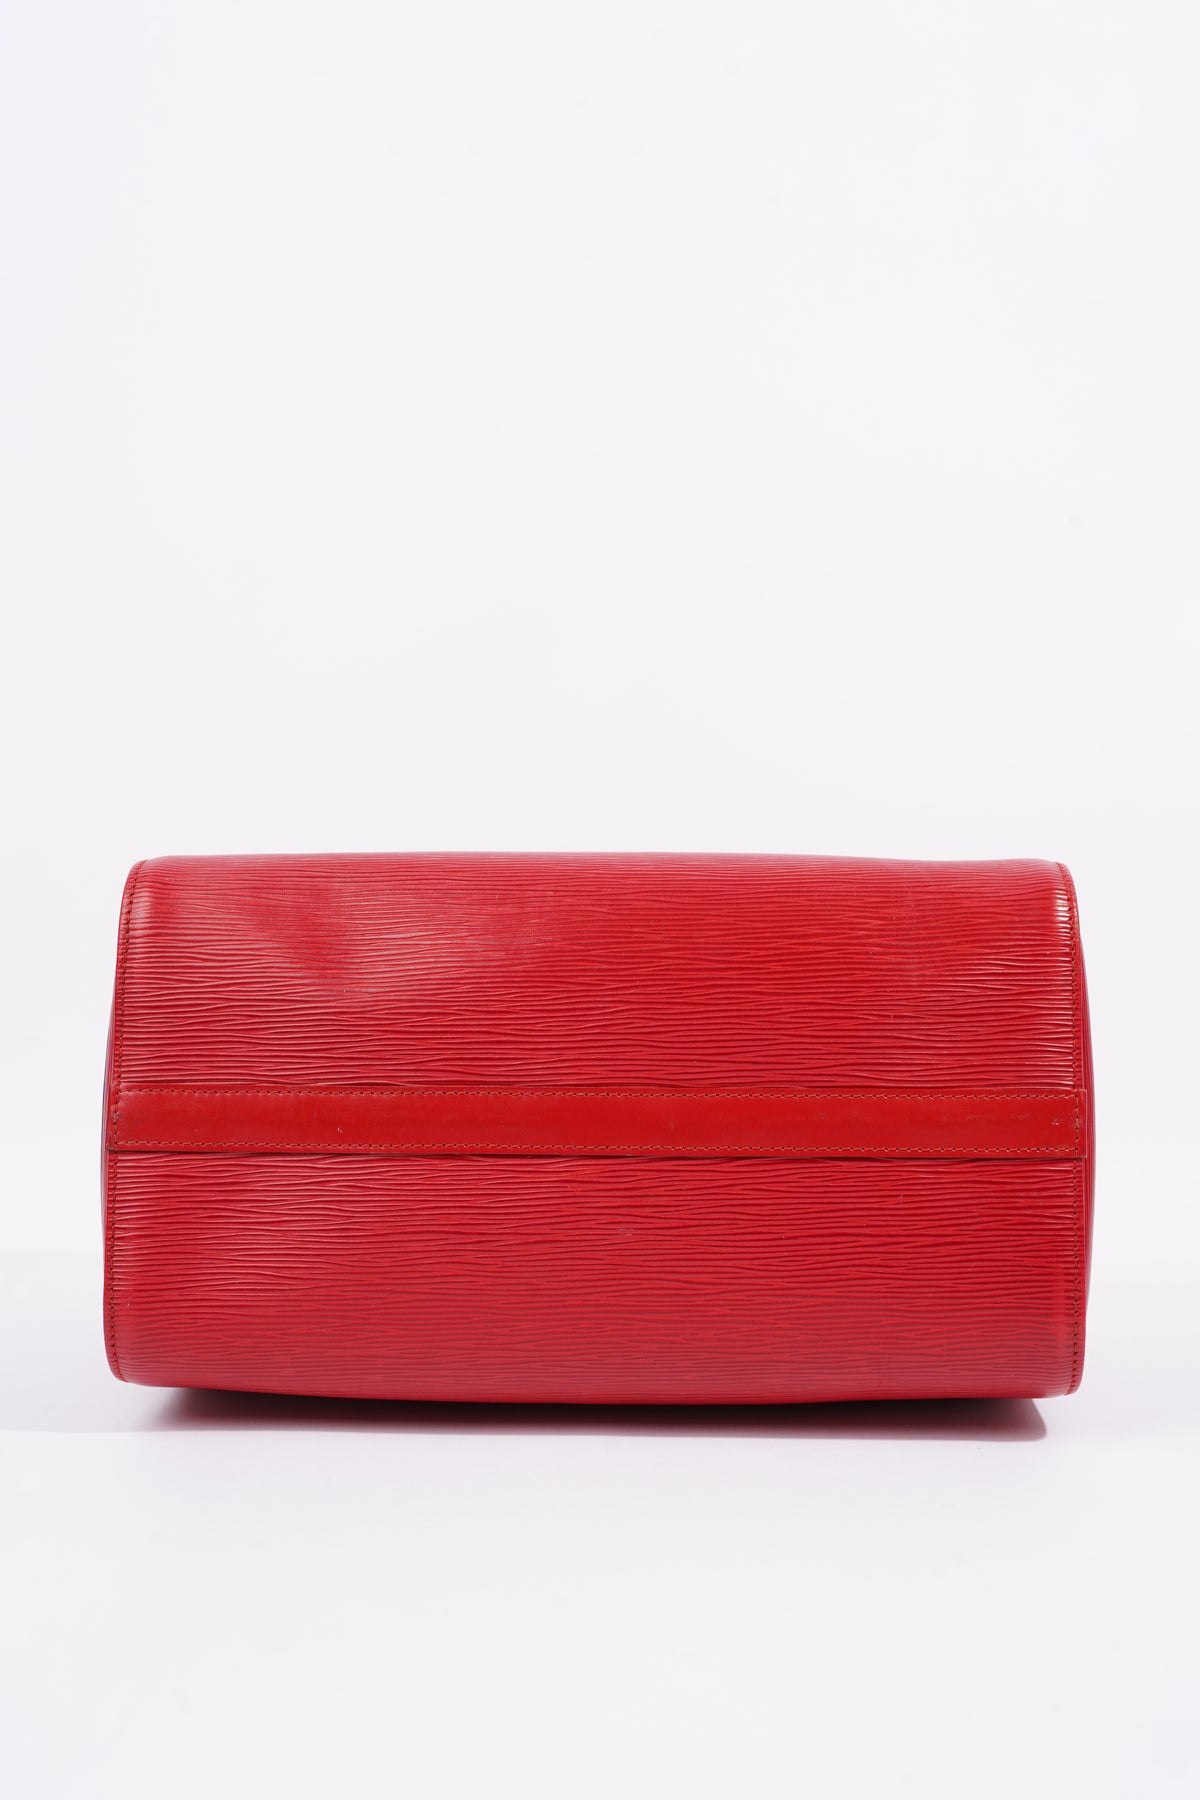 Heritage Vintage: Louis Vuitton Red Epi Speedy 30 Bag.  Luxury